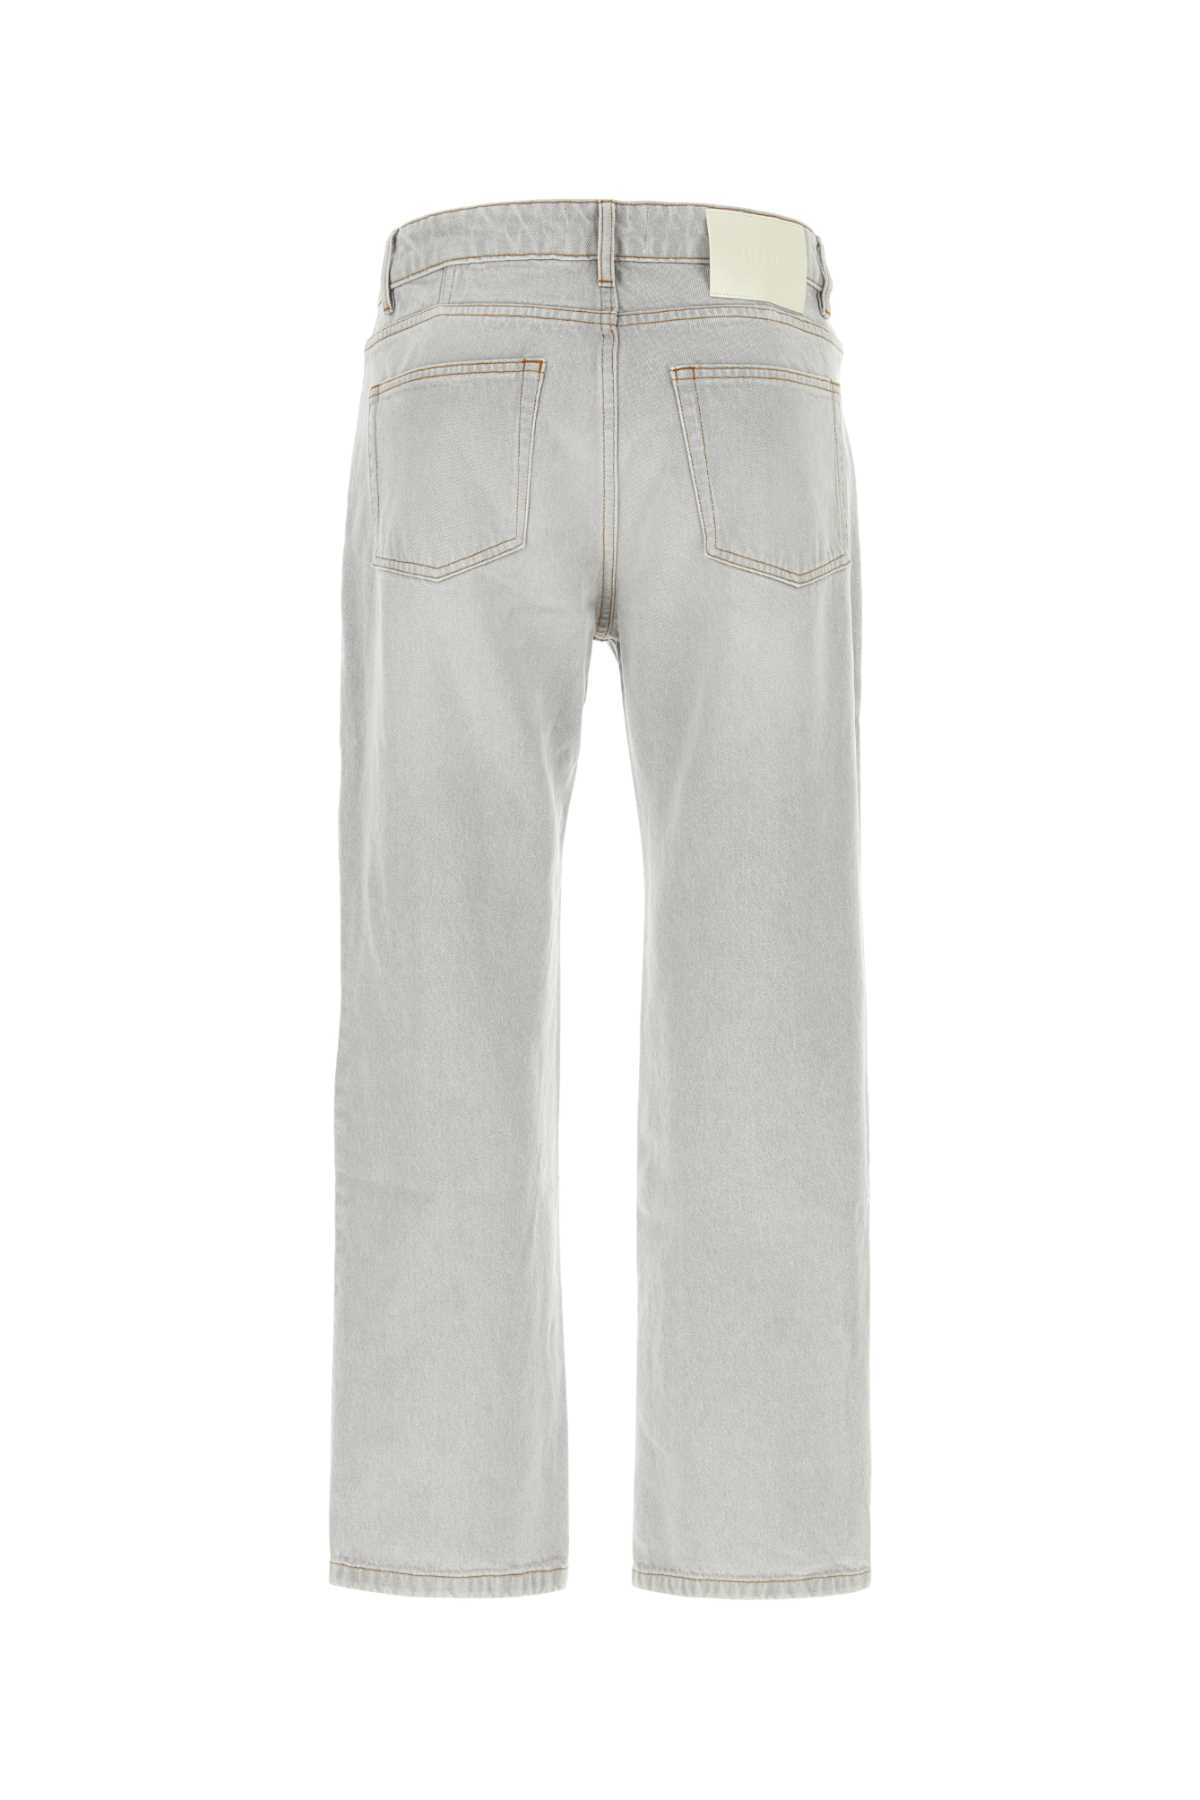 Ami Alexandre Mattiussi Light Grey Denim Jeans In Javelgrey